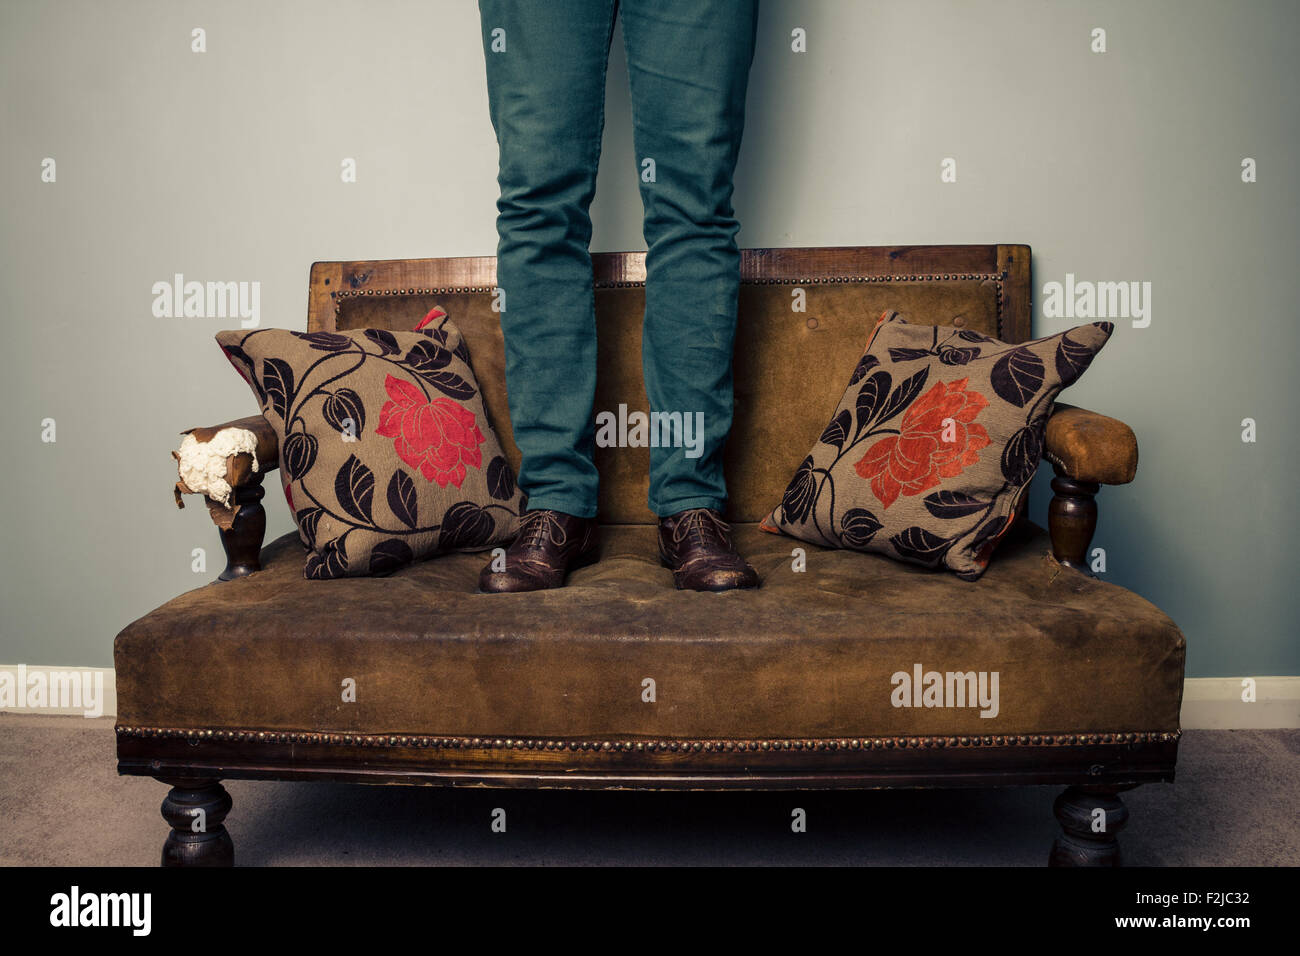 Legs of man standing on sofa Stock Photo